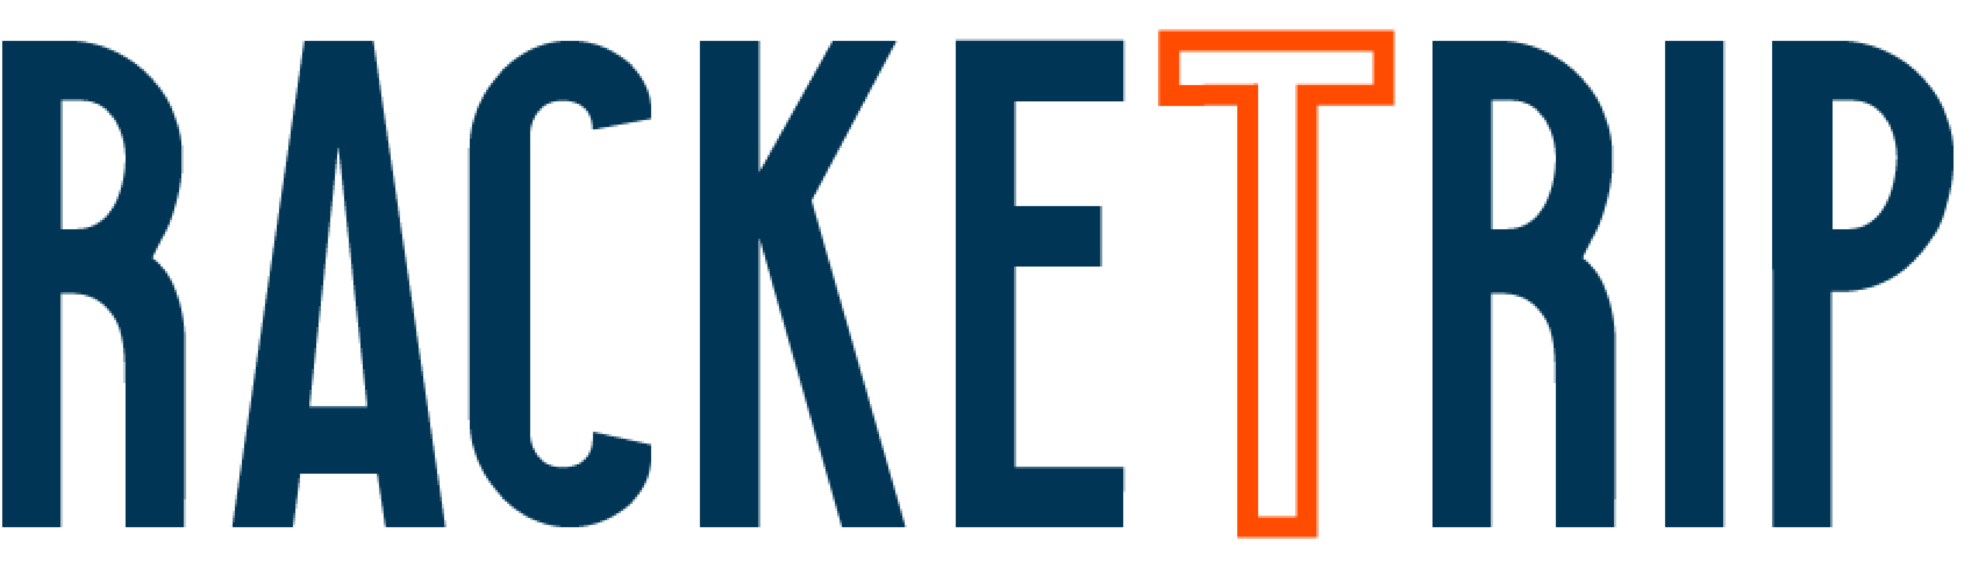 logo-racketrip-blå